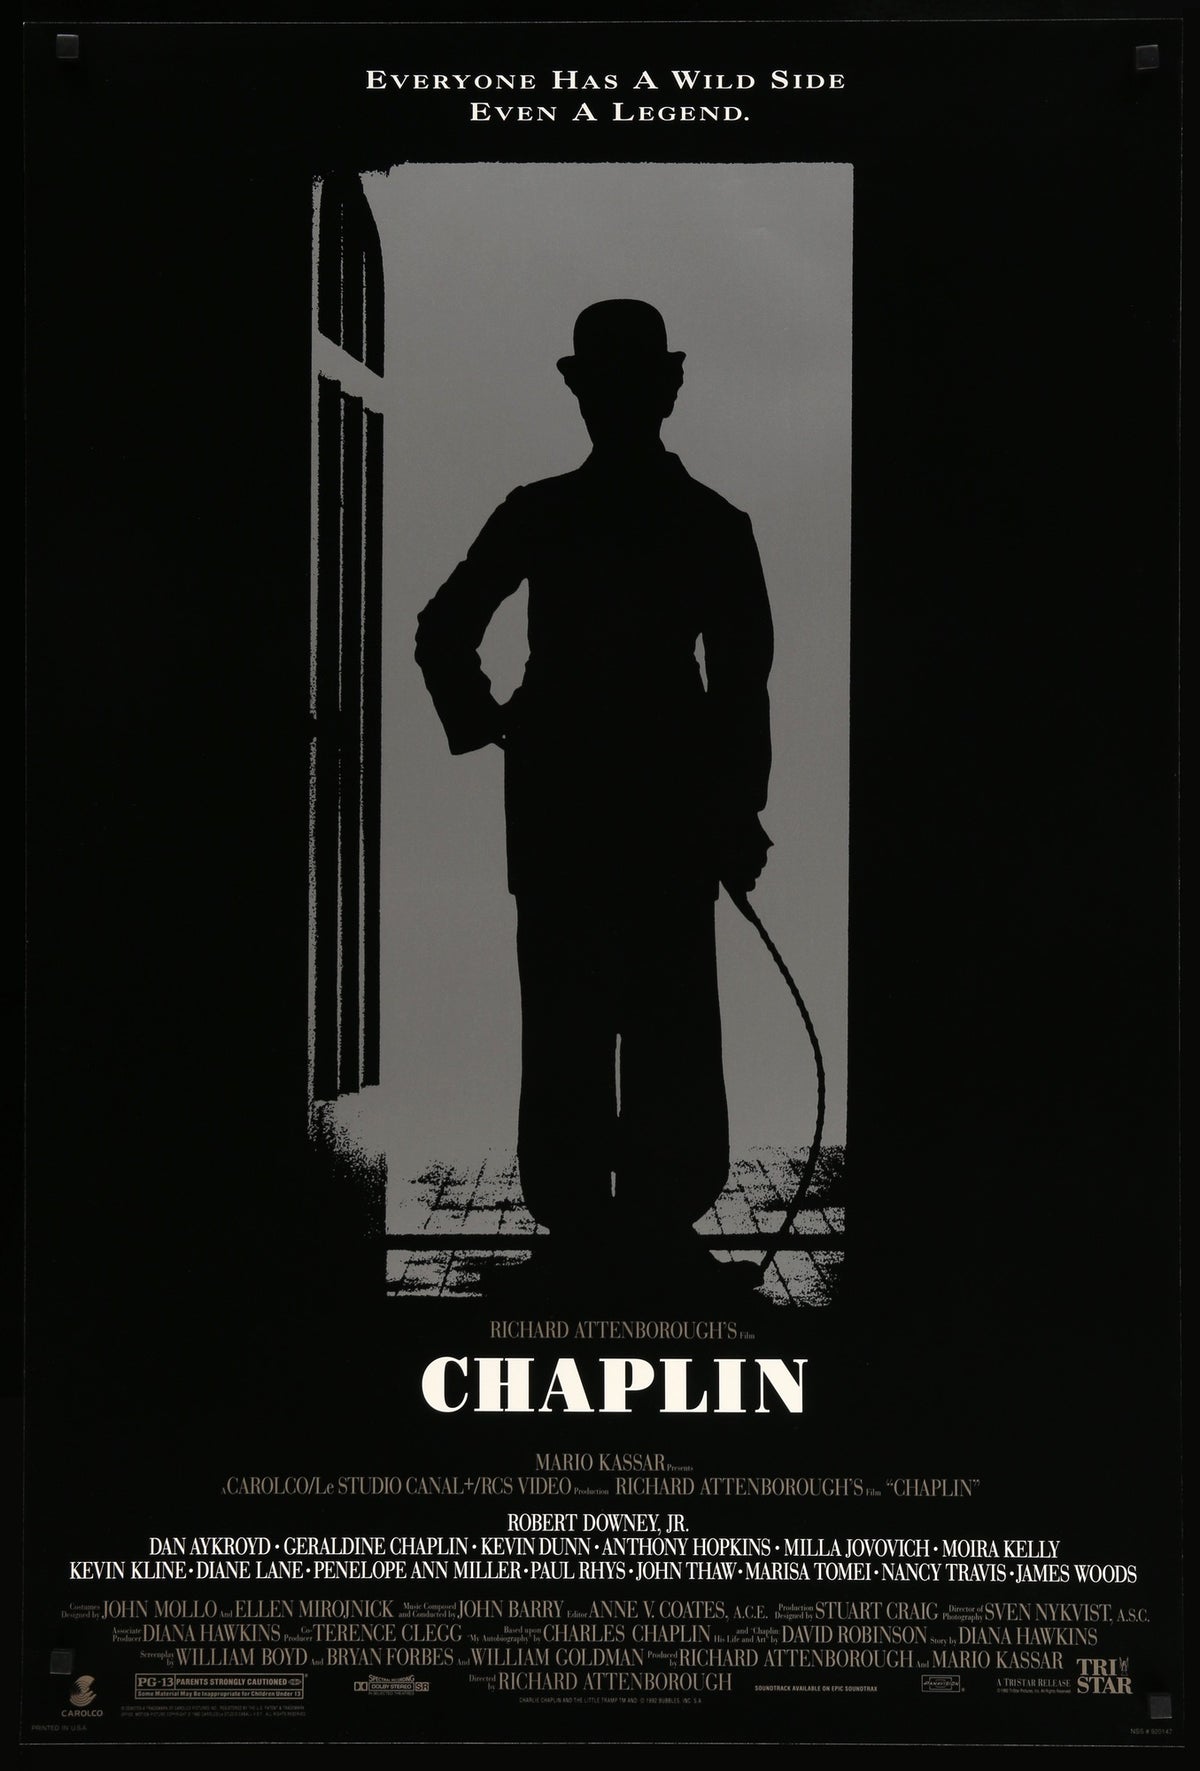 Chaplin (1992) original movie poster for sale at Original Film Art